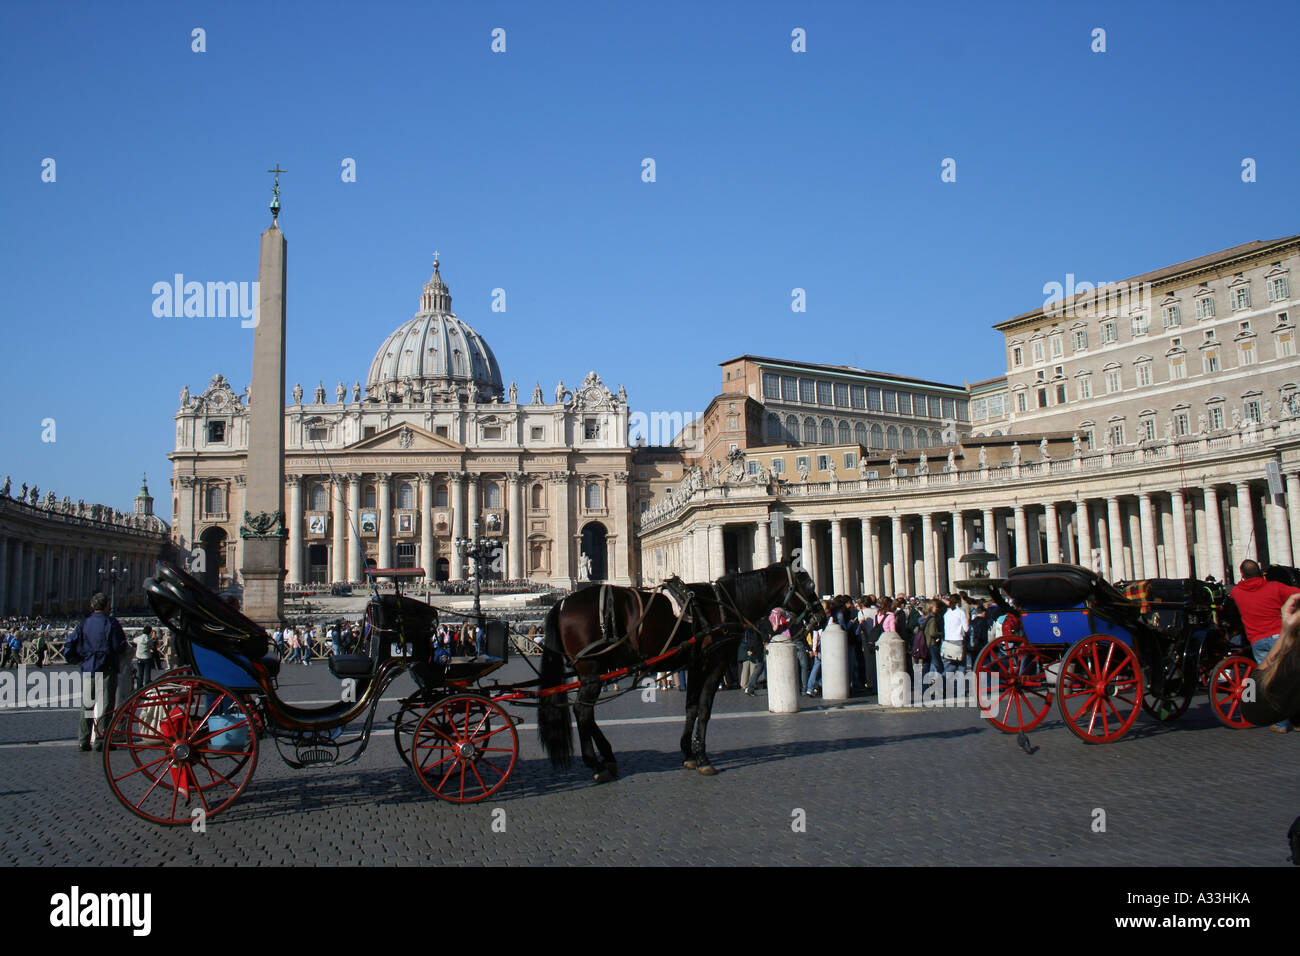 Traditionelle Pferd und Kutsche erwarten Passagiere in Sankt Peter Platz, Vatikanstadt, Rom, Italien. Stockfoto